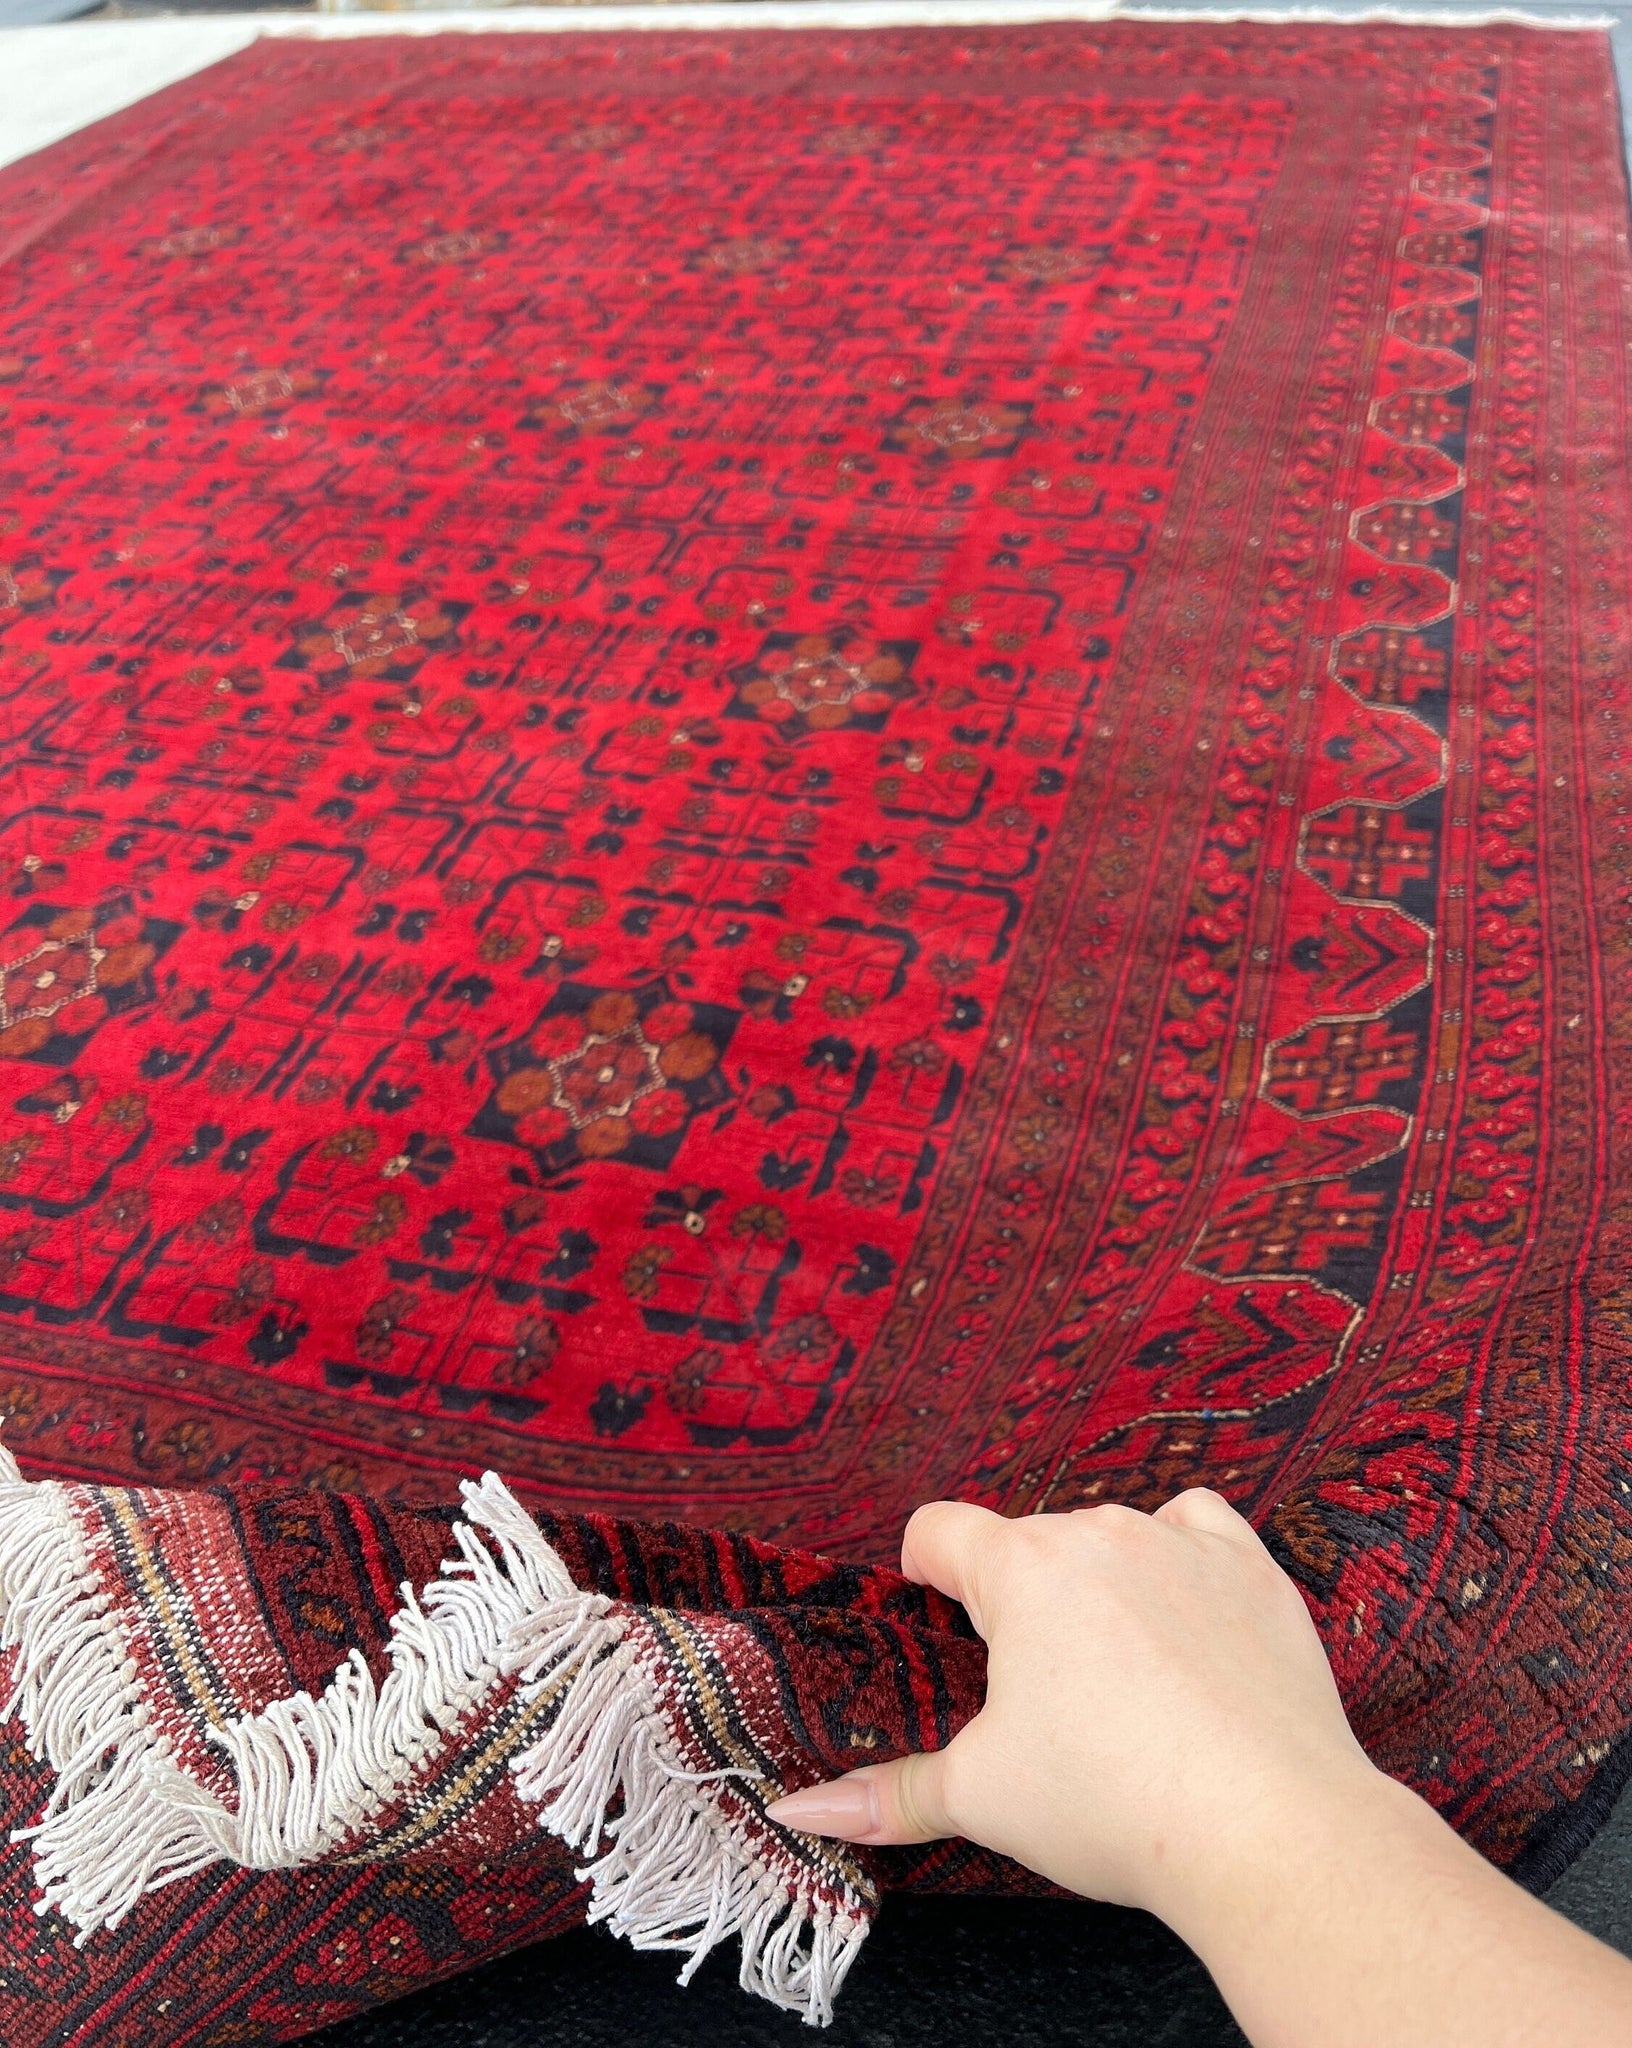 9x12 (270x365) Handmade Afghan Rug | Cherry Red Brick Red Black Burnt Orange Brown | Hand Knotted Oriental Turkish Wool Persian Floral Boho